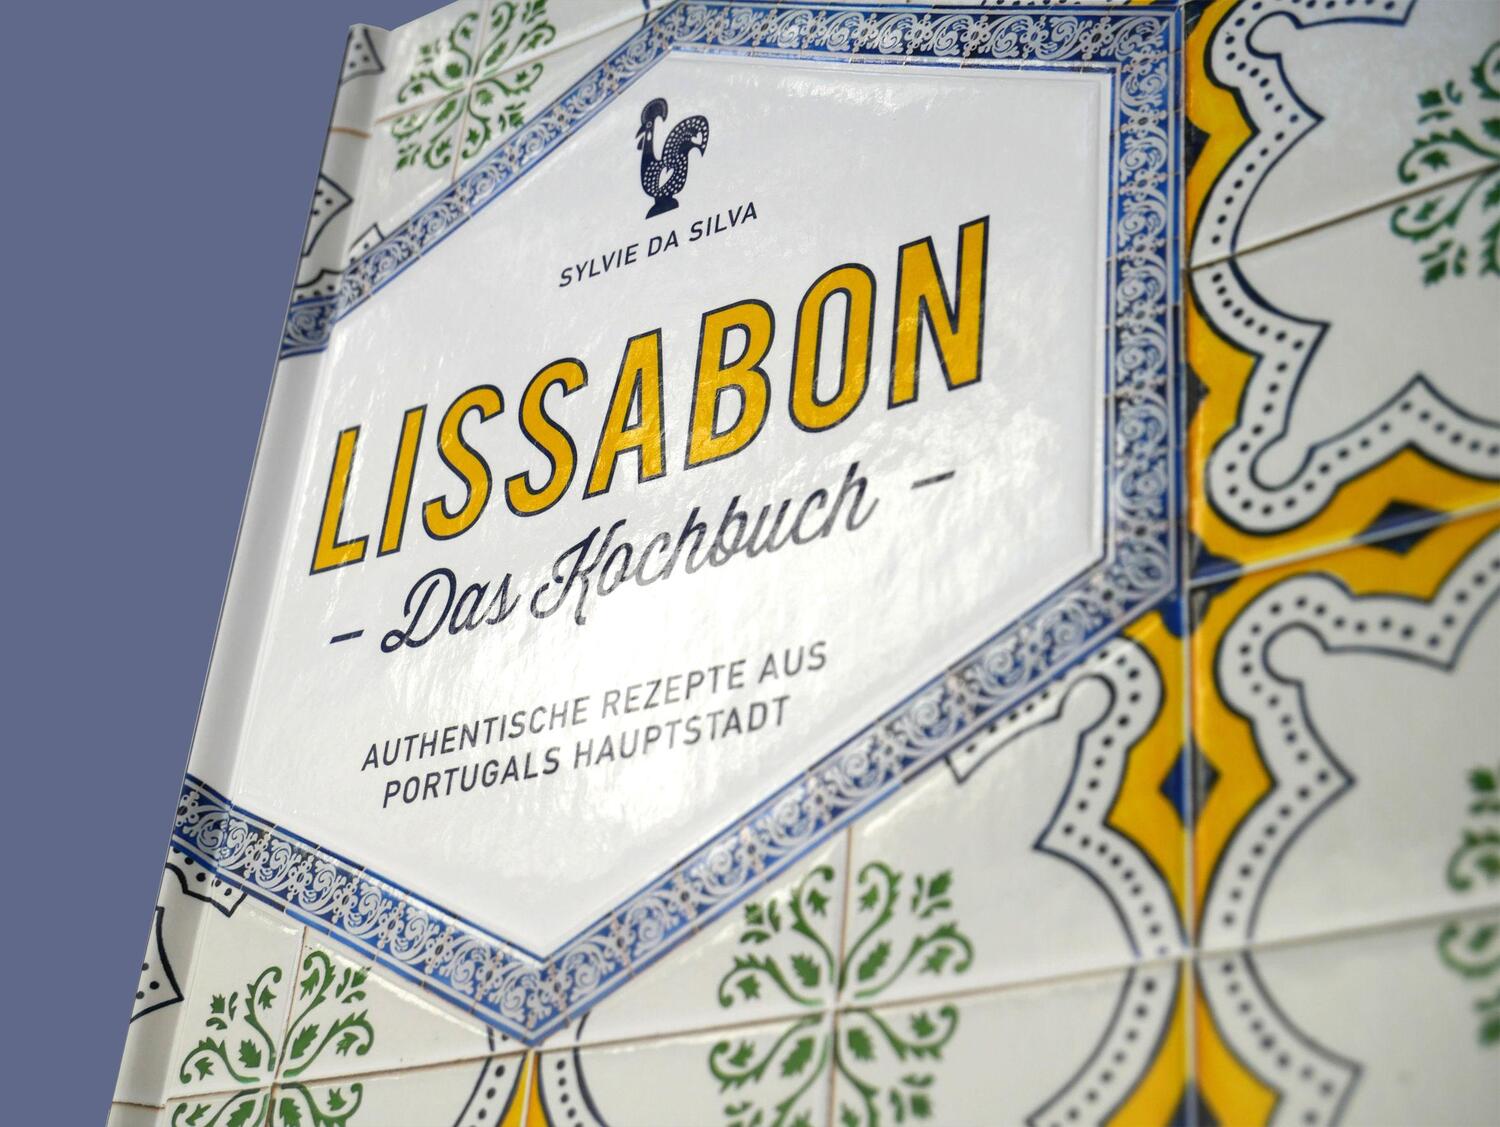 Bild: 9783517096117 | Lissabon - Das Kochbuch | Sylvie Da Silva | Buch | ca. 80 Farbfotos